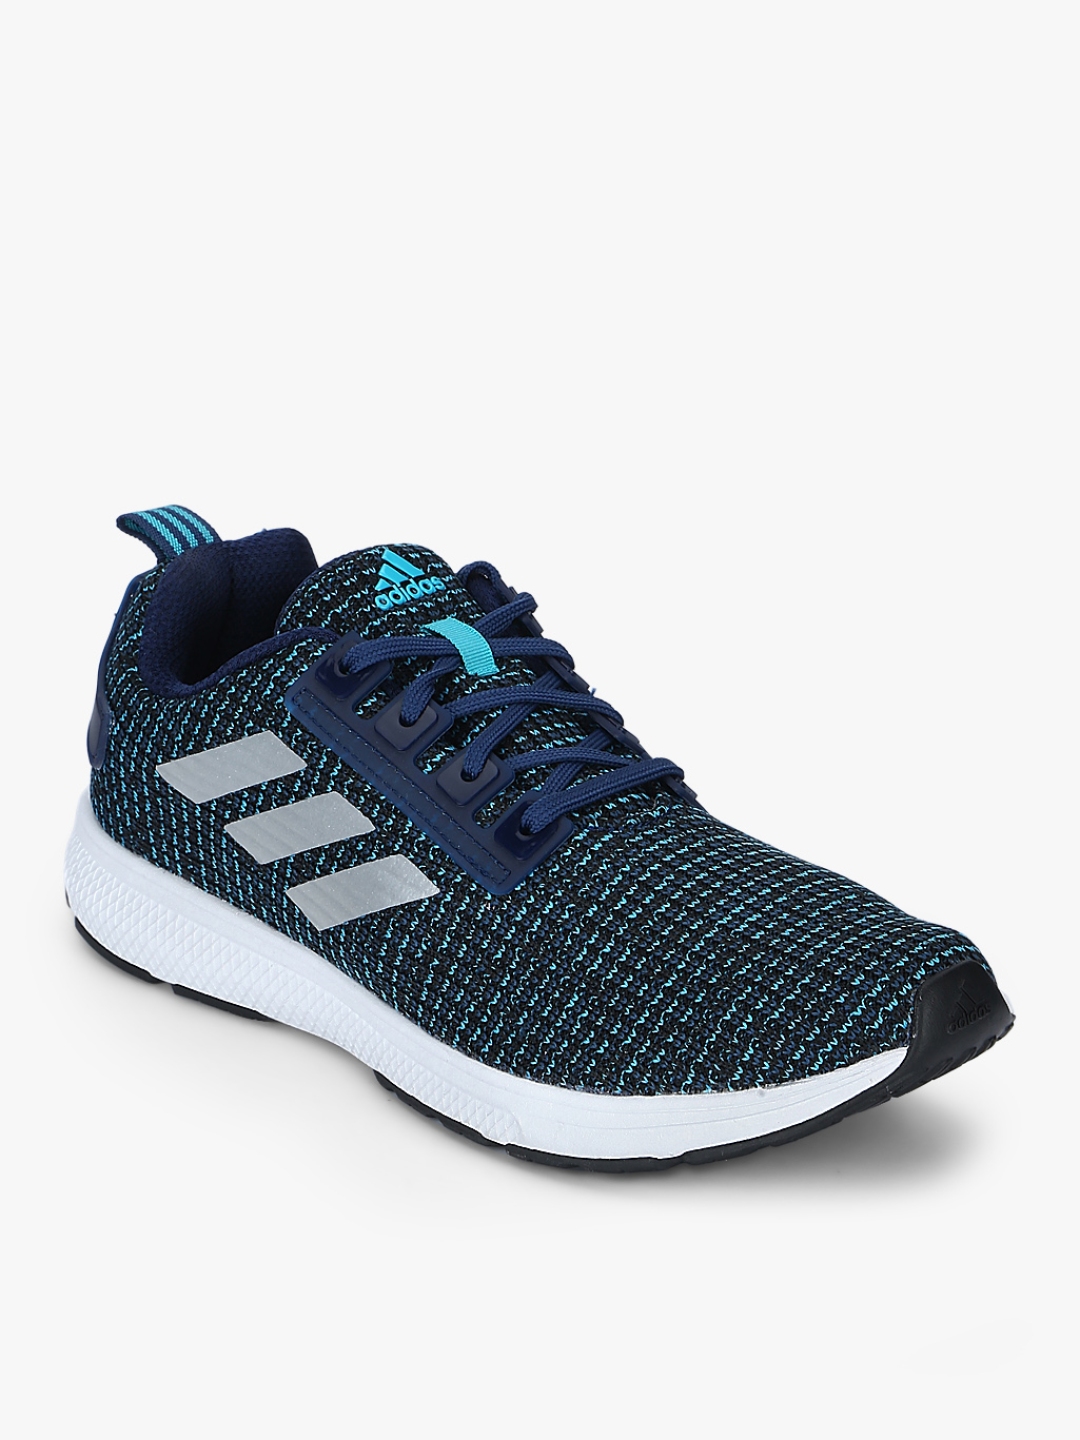 Buy Legus Blue Running Shoes - Sports Shoes for Men 7636082 | Myntra